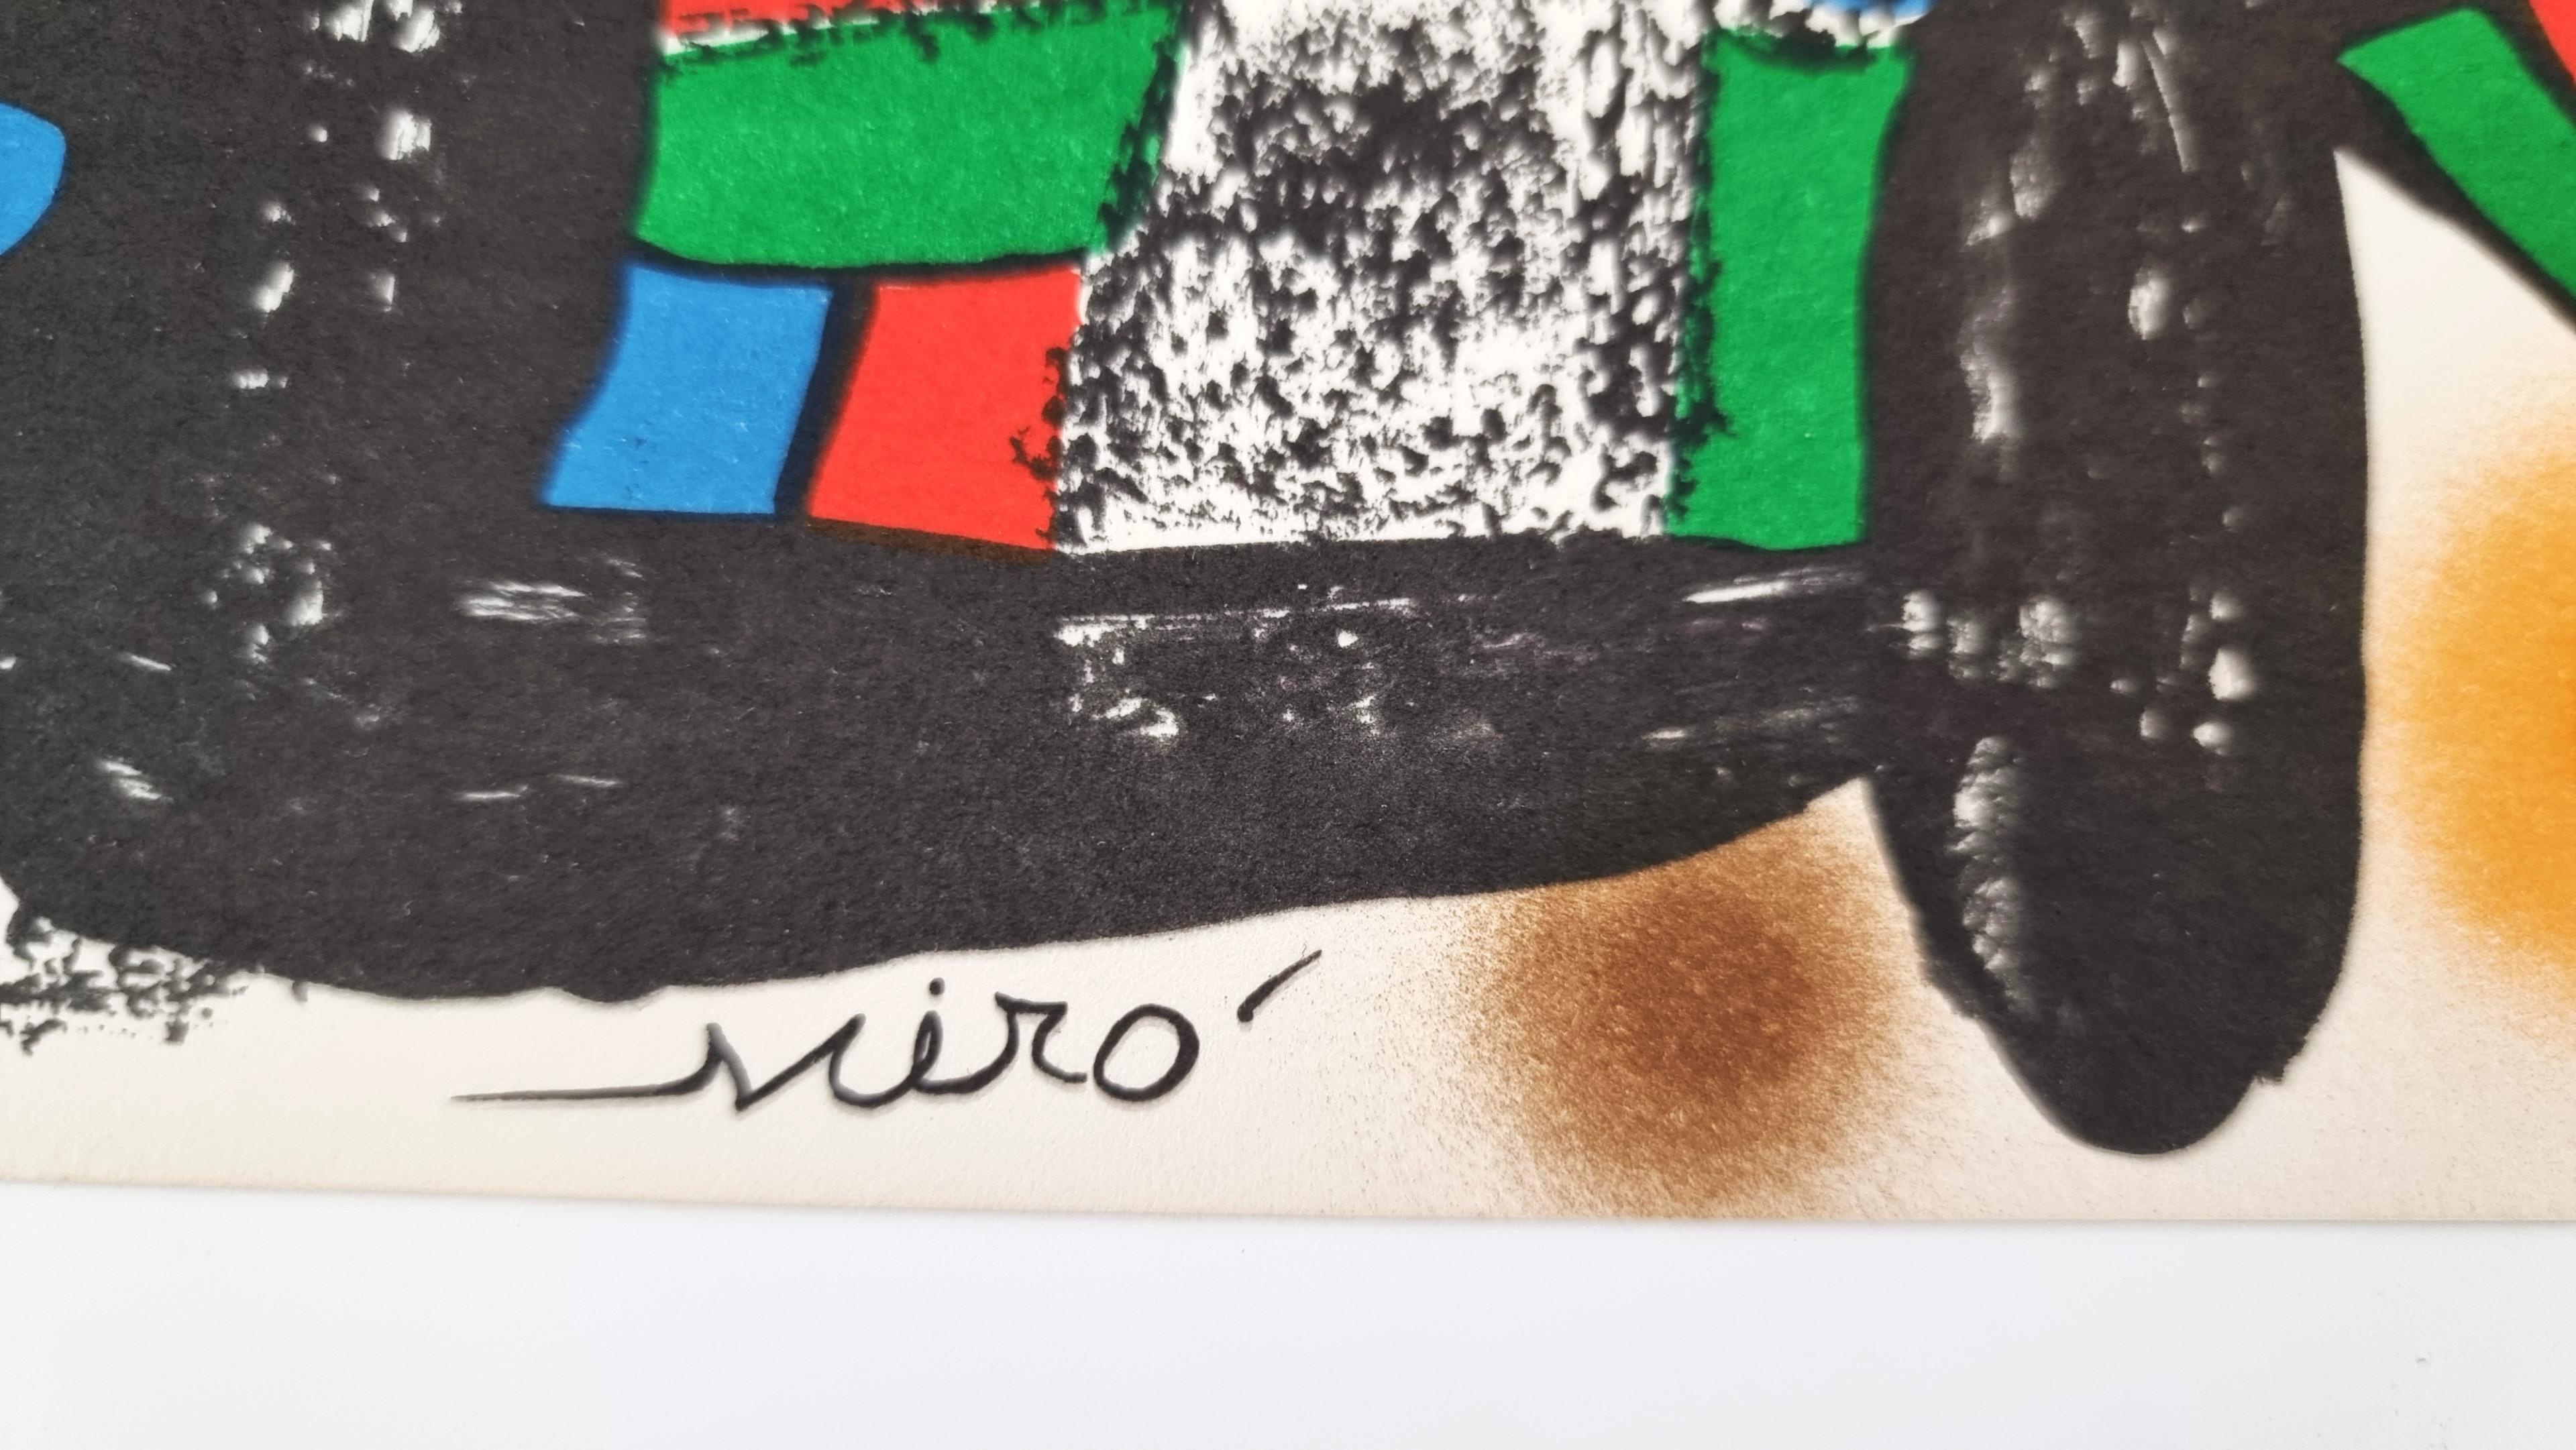 Escultor - Great Britain - Modern Print by Joan Miró